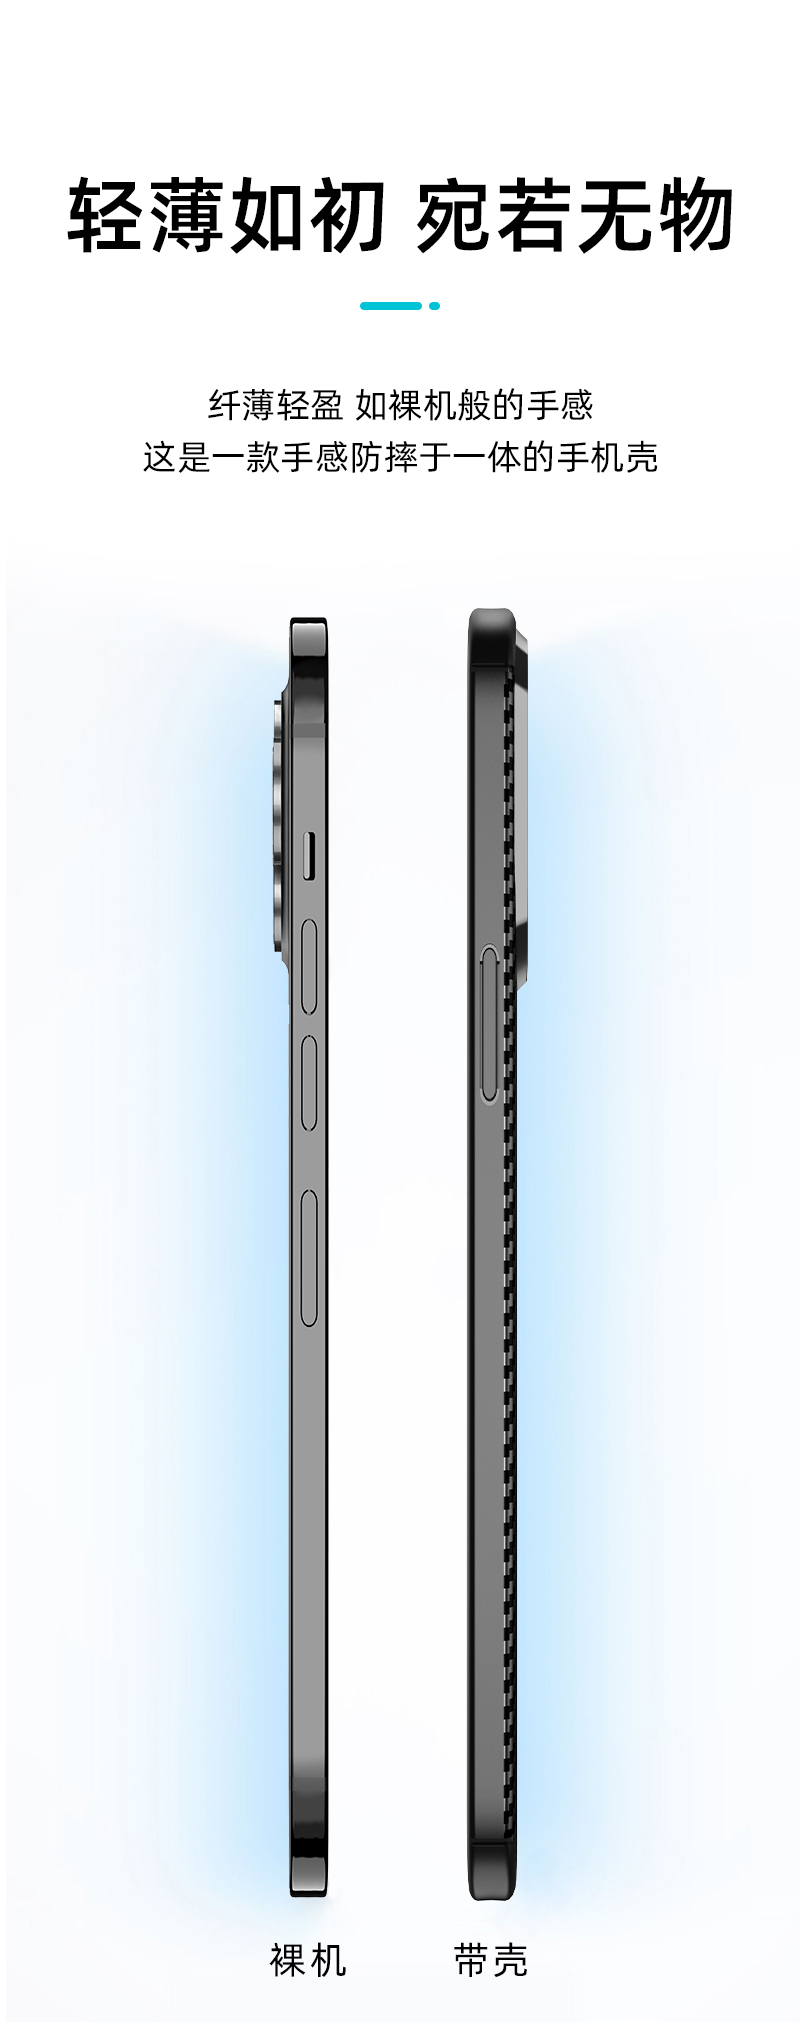 wlons iPhone7-13系列 碳纤维纹手机壳 13元包邮 买手党-买手聚集的地方